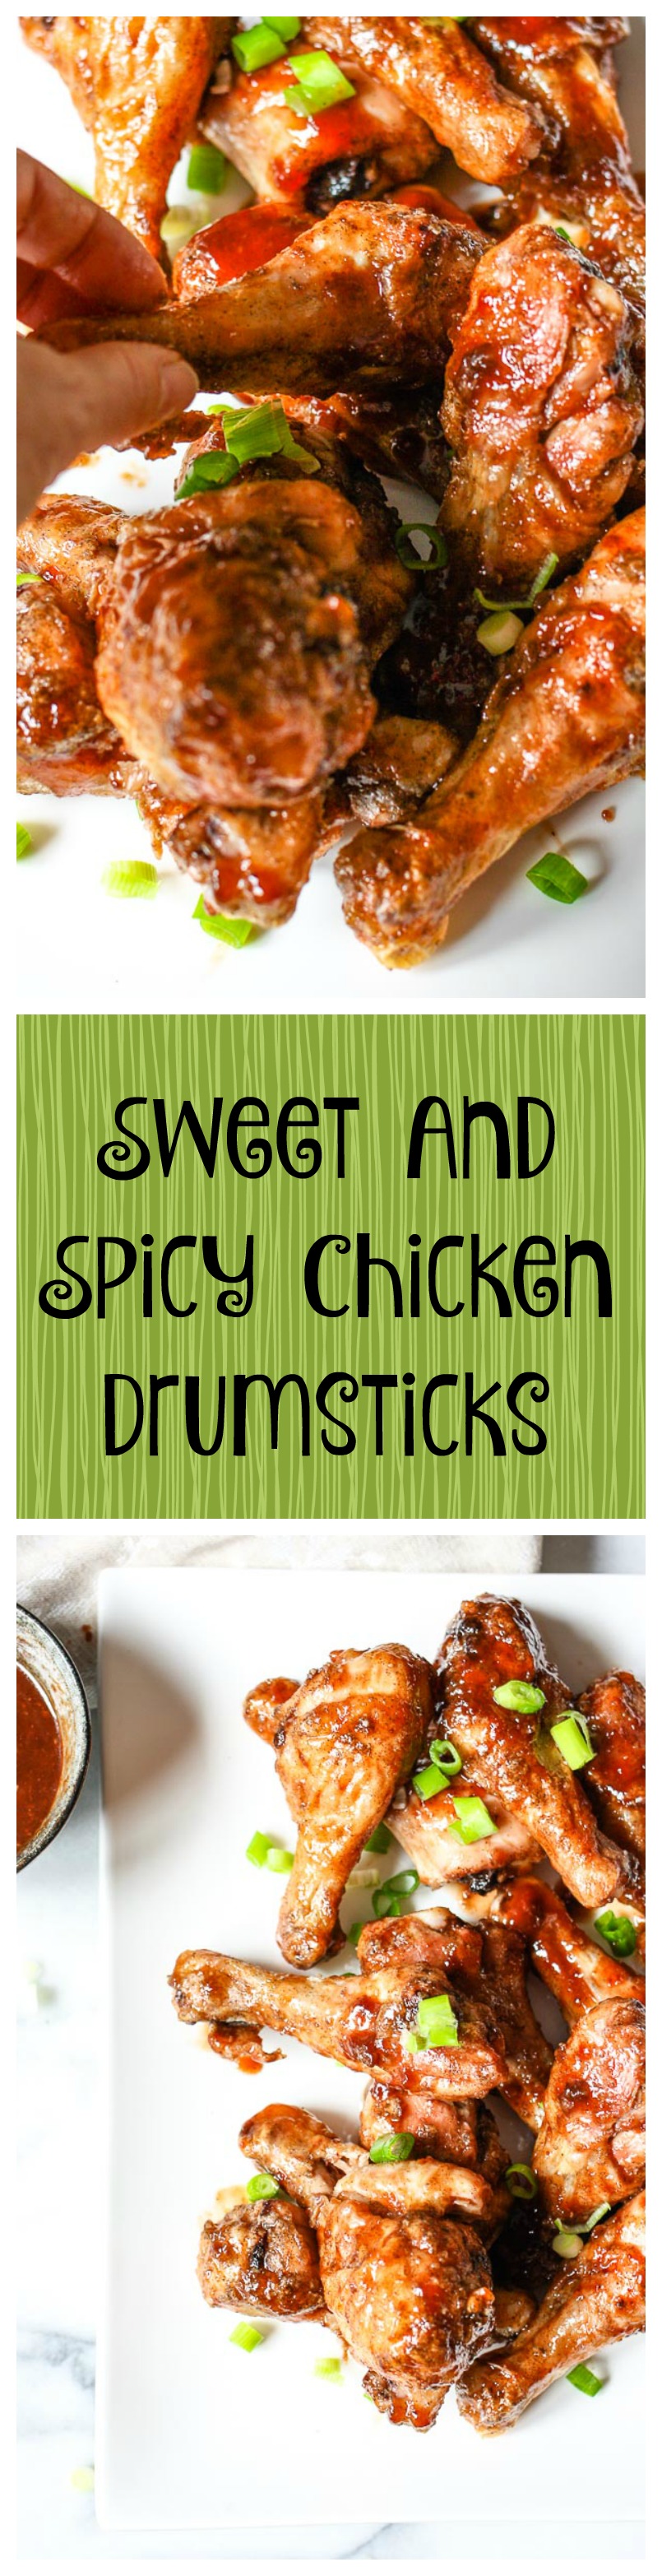 sweet and spicy chicken drumsticks